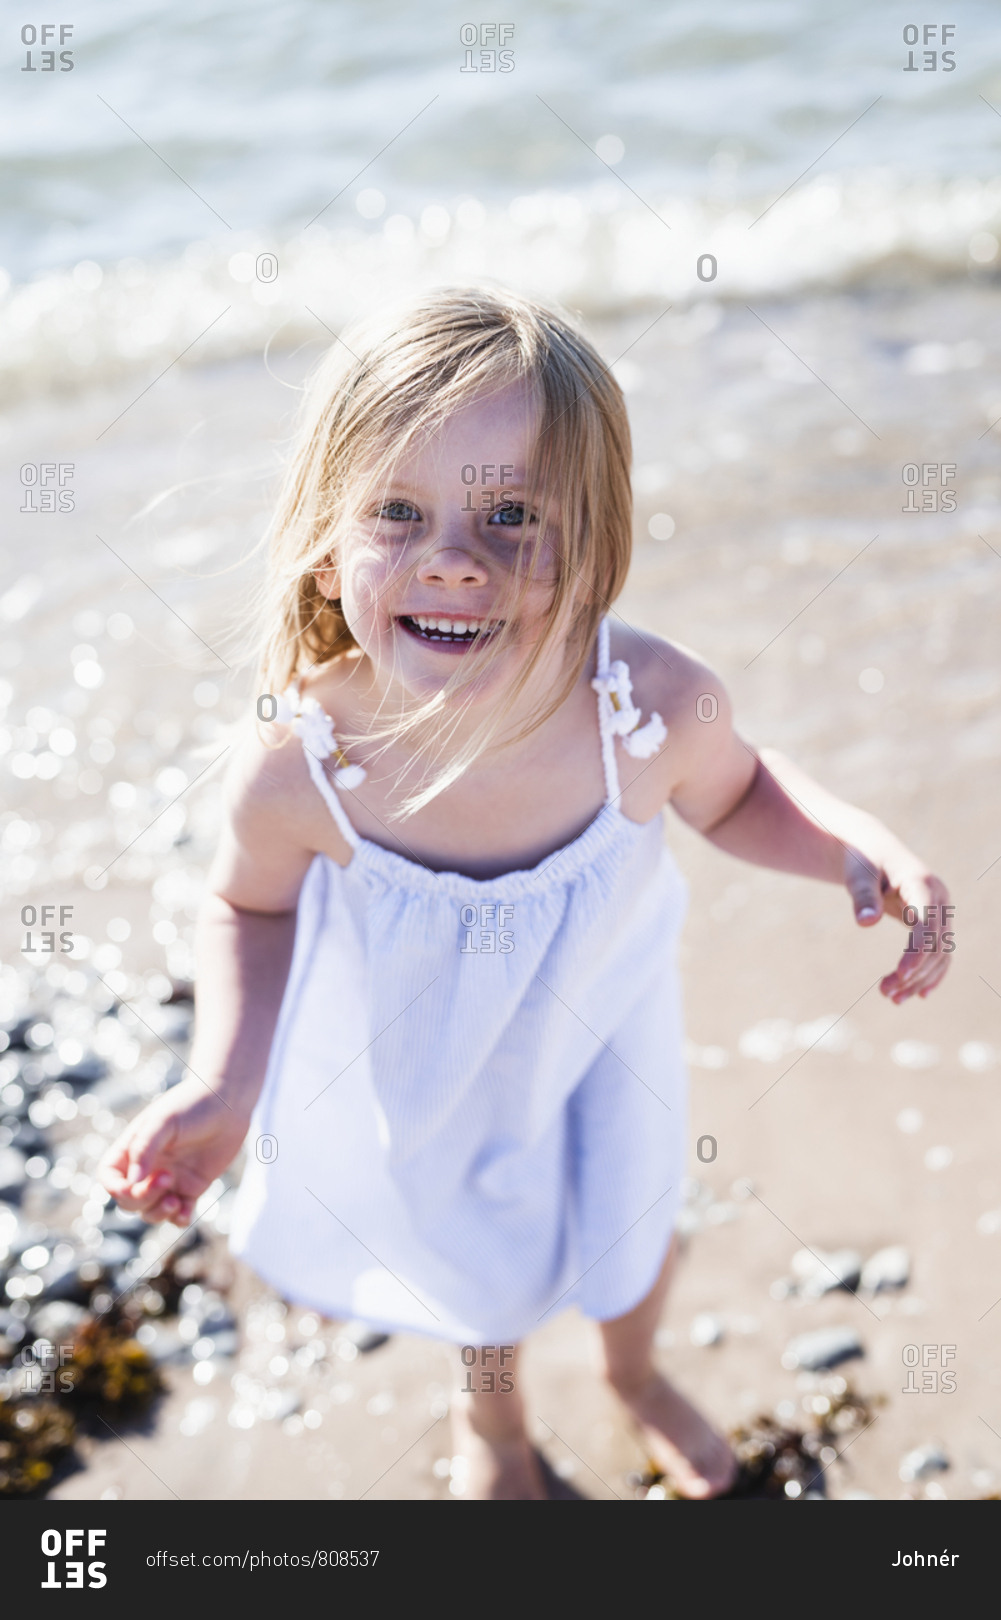 Happy girl on beach - Offset stock photo - OFFSET